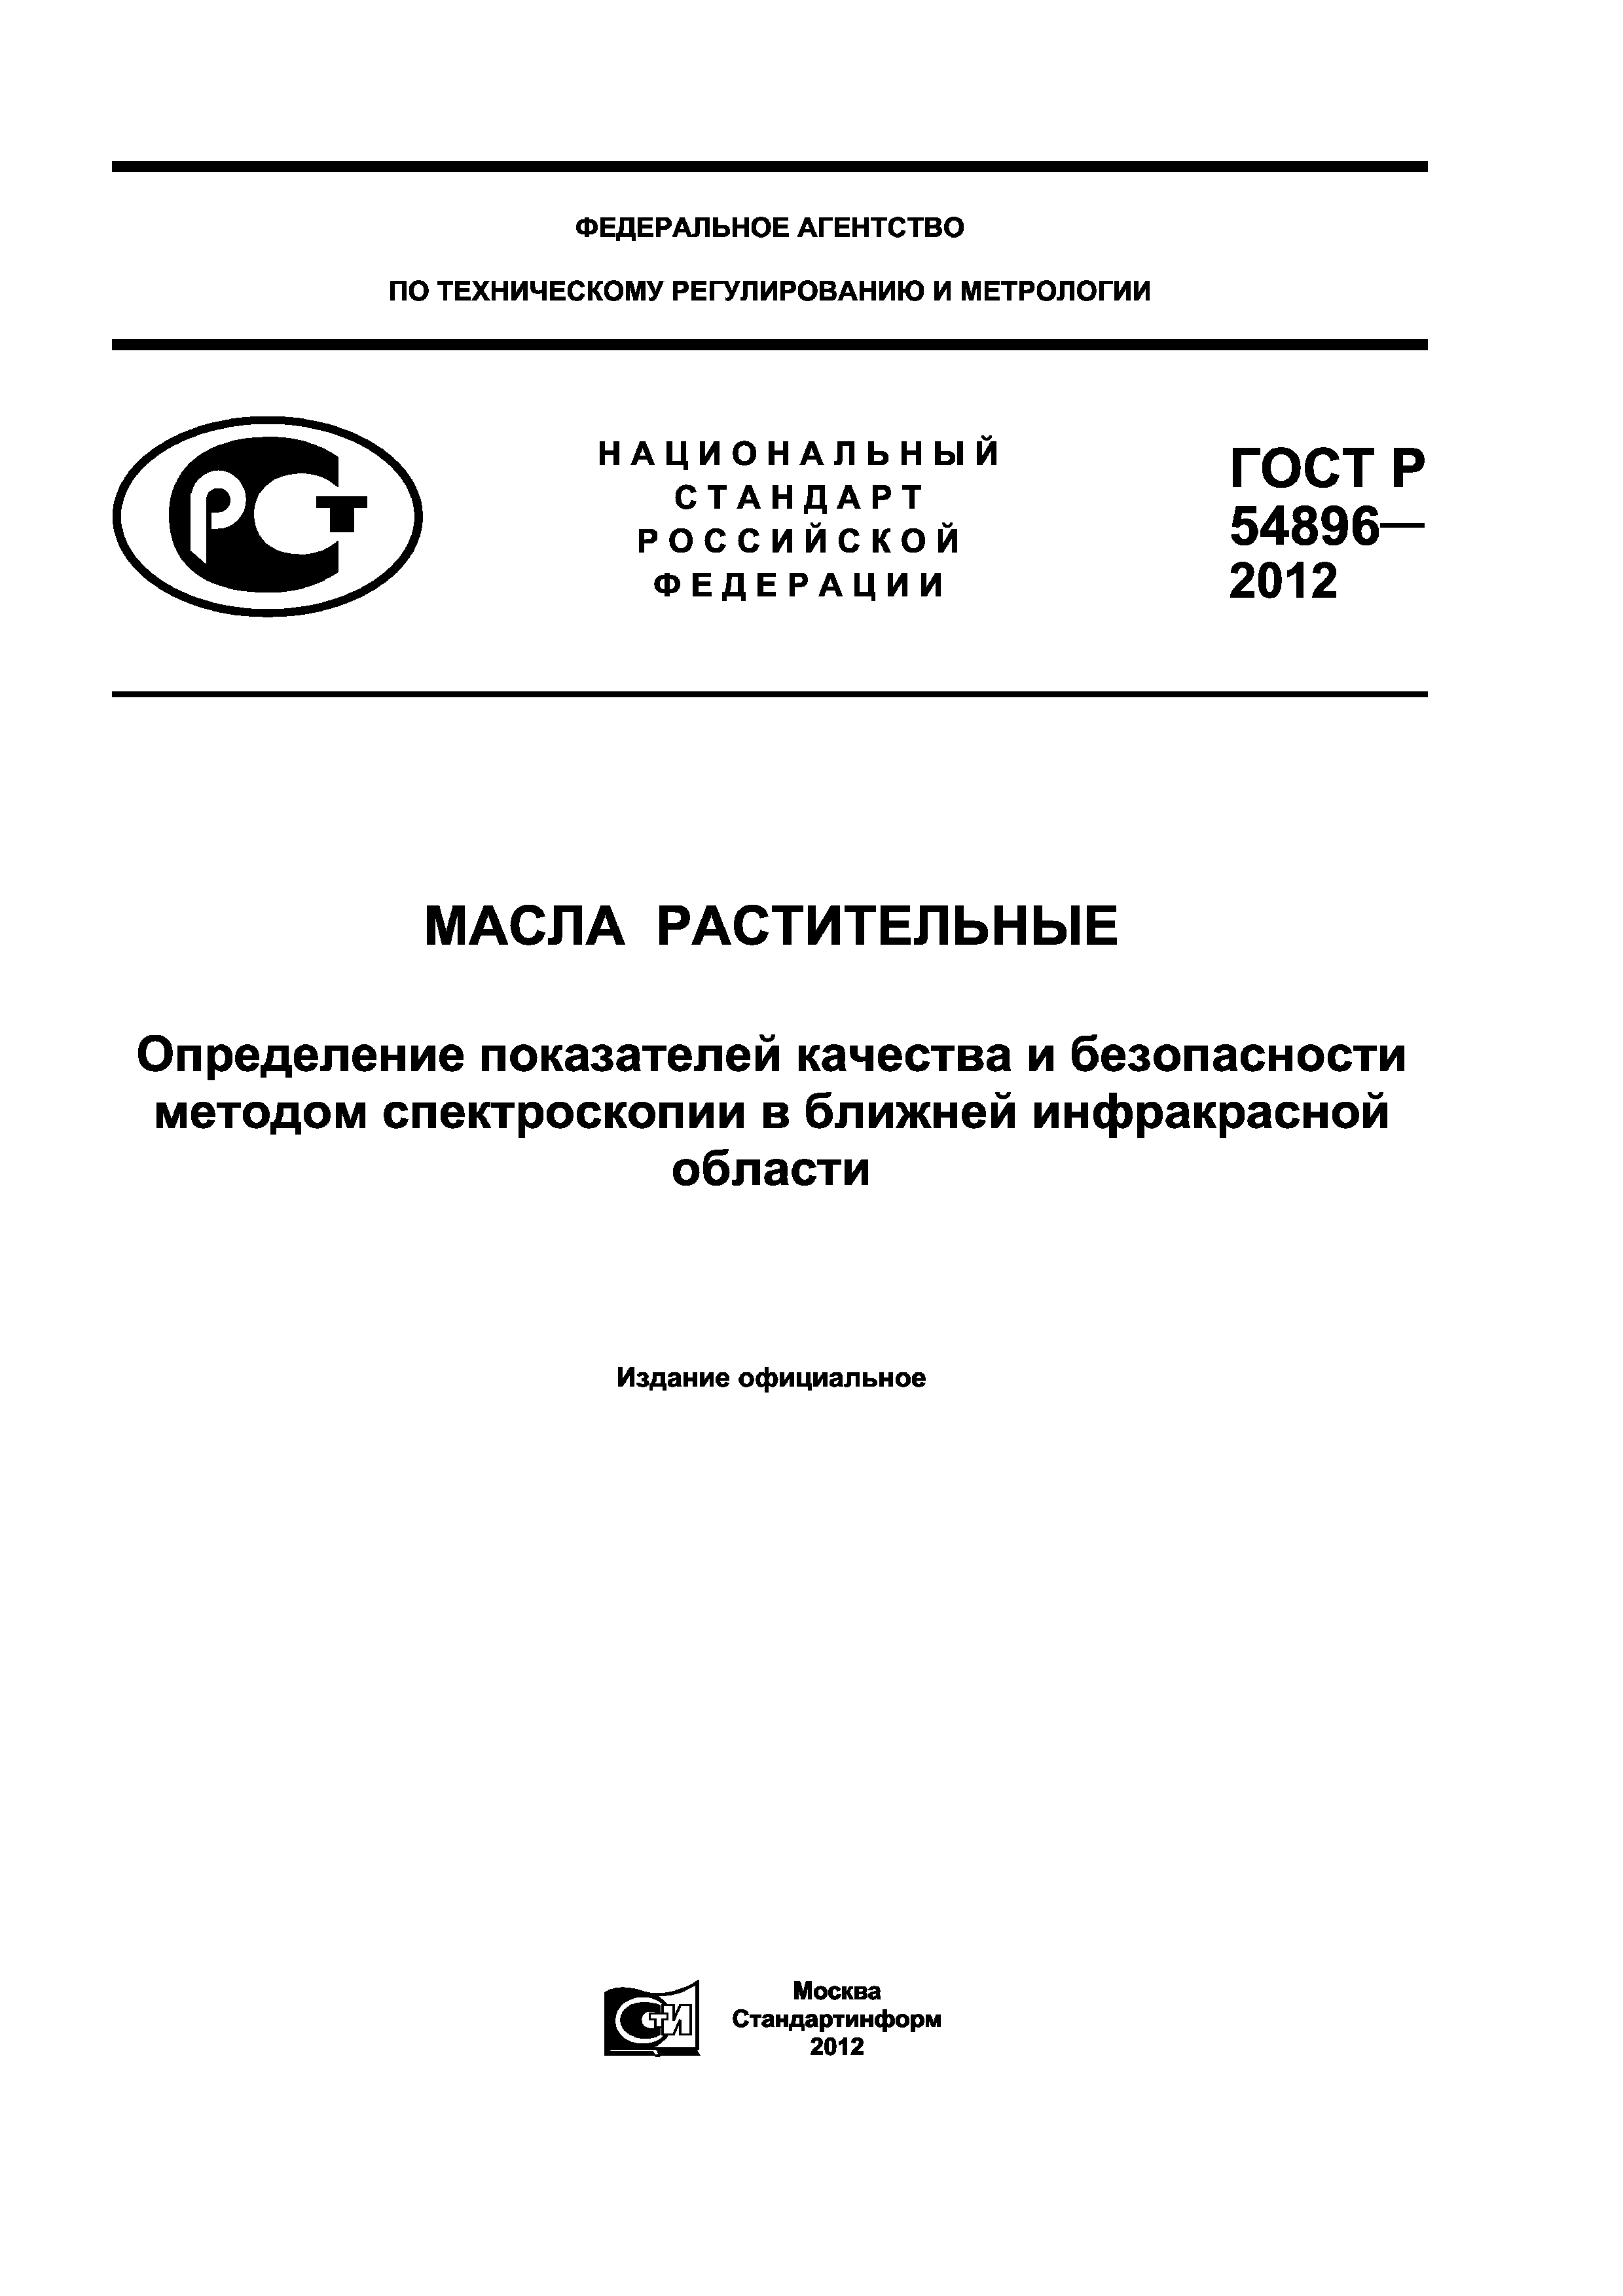 ГОСТ Р 54896-2012